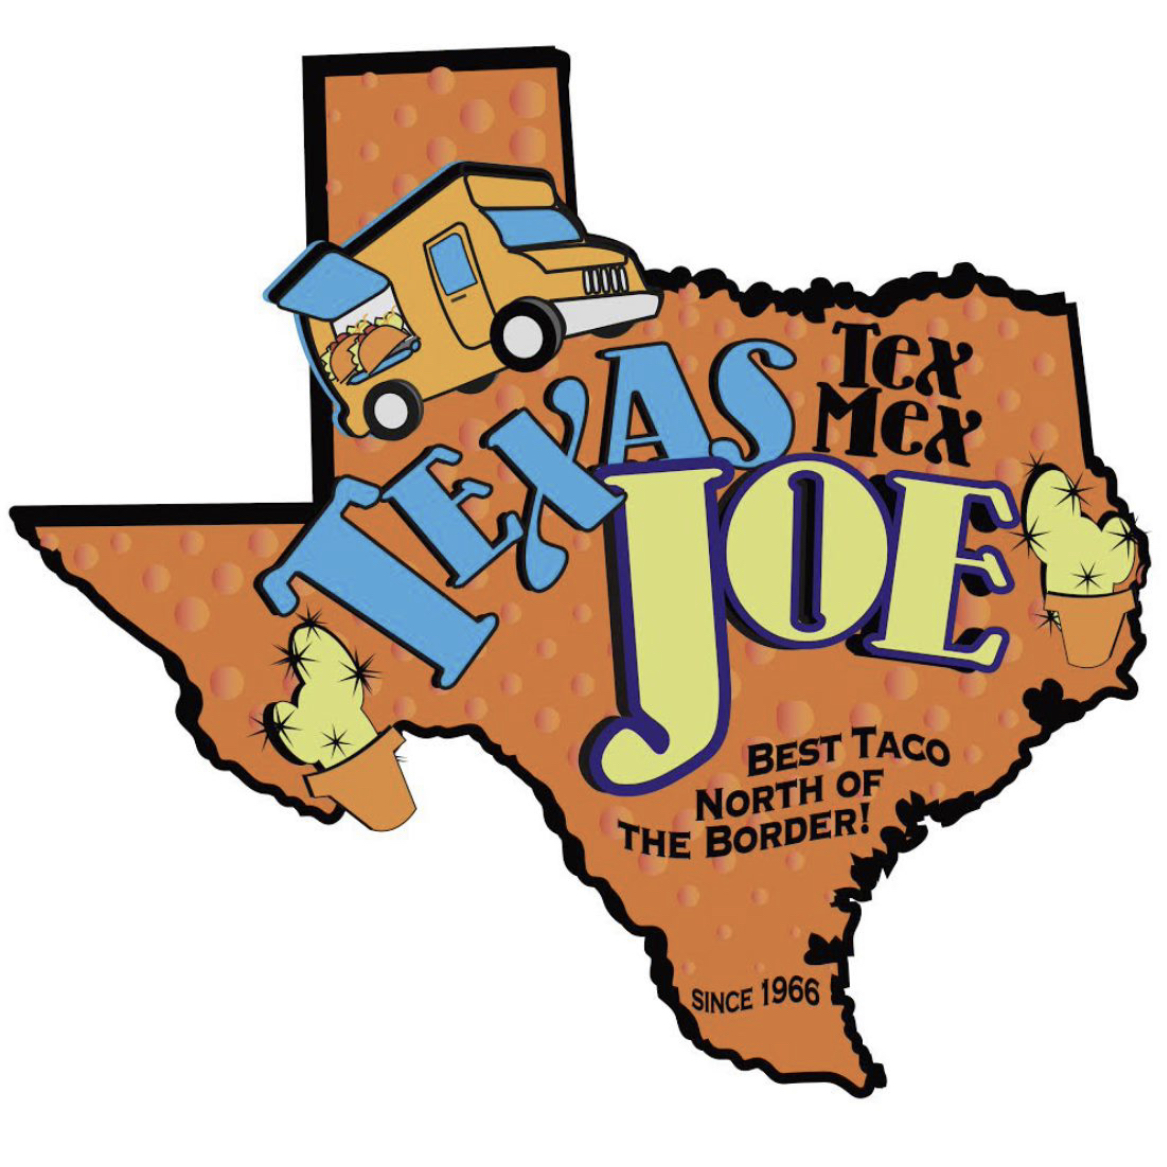 Texas Joe